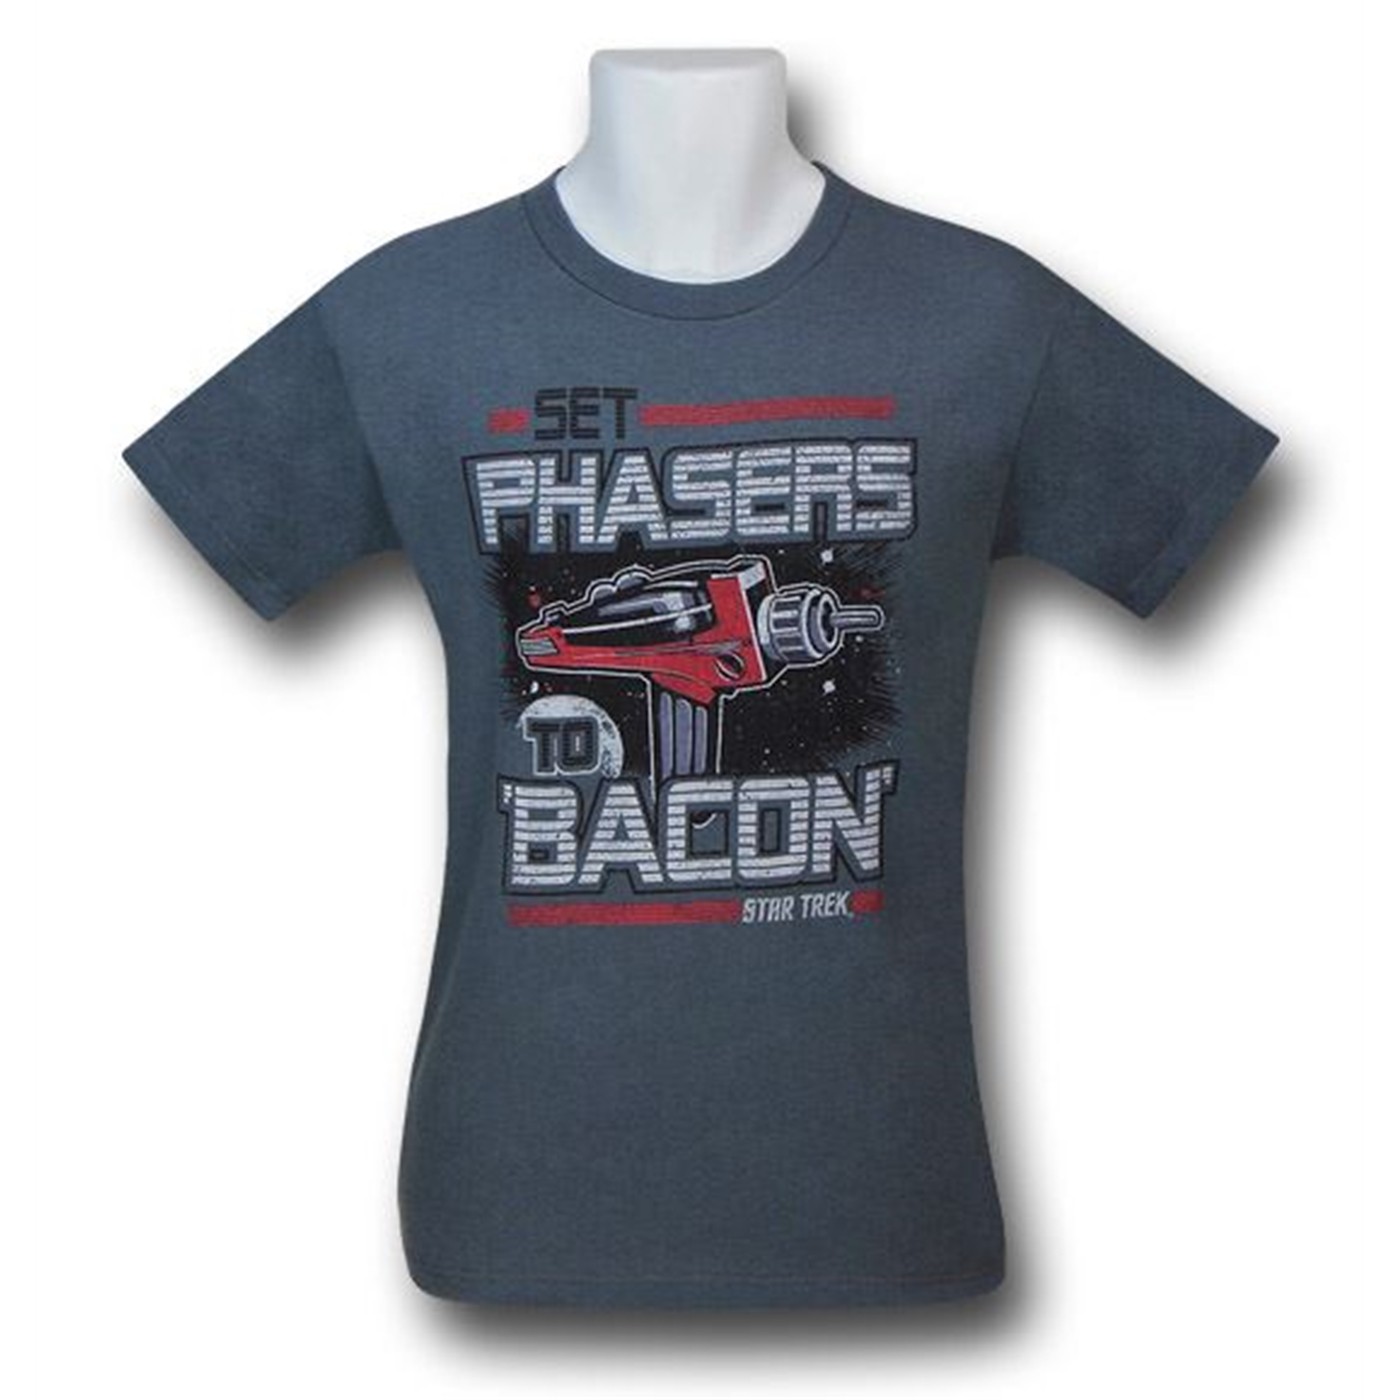 Star Trek Bacon Phasers 30 Single T-Shirt